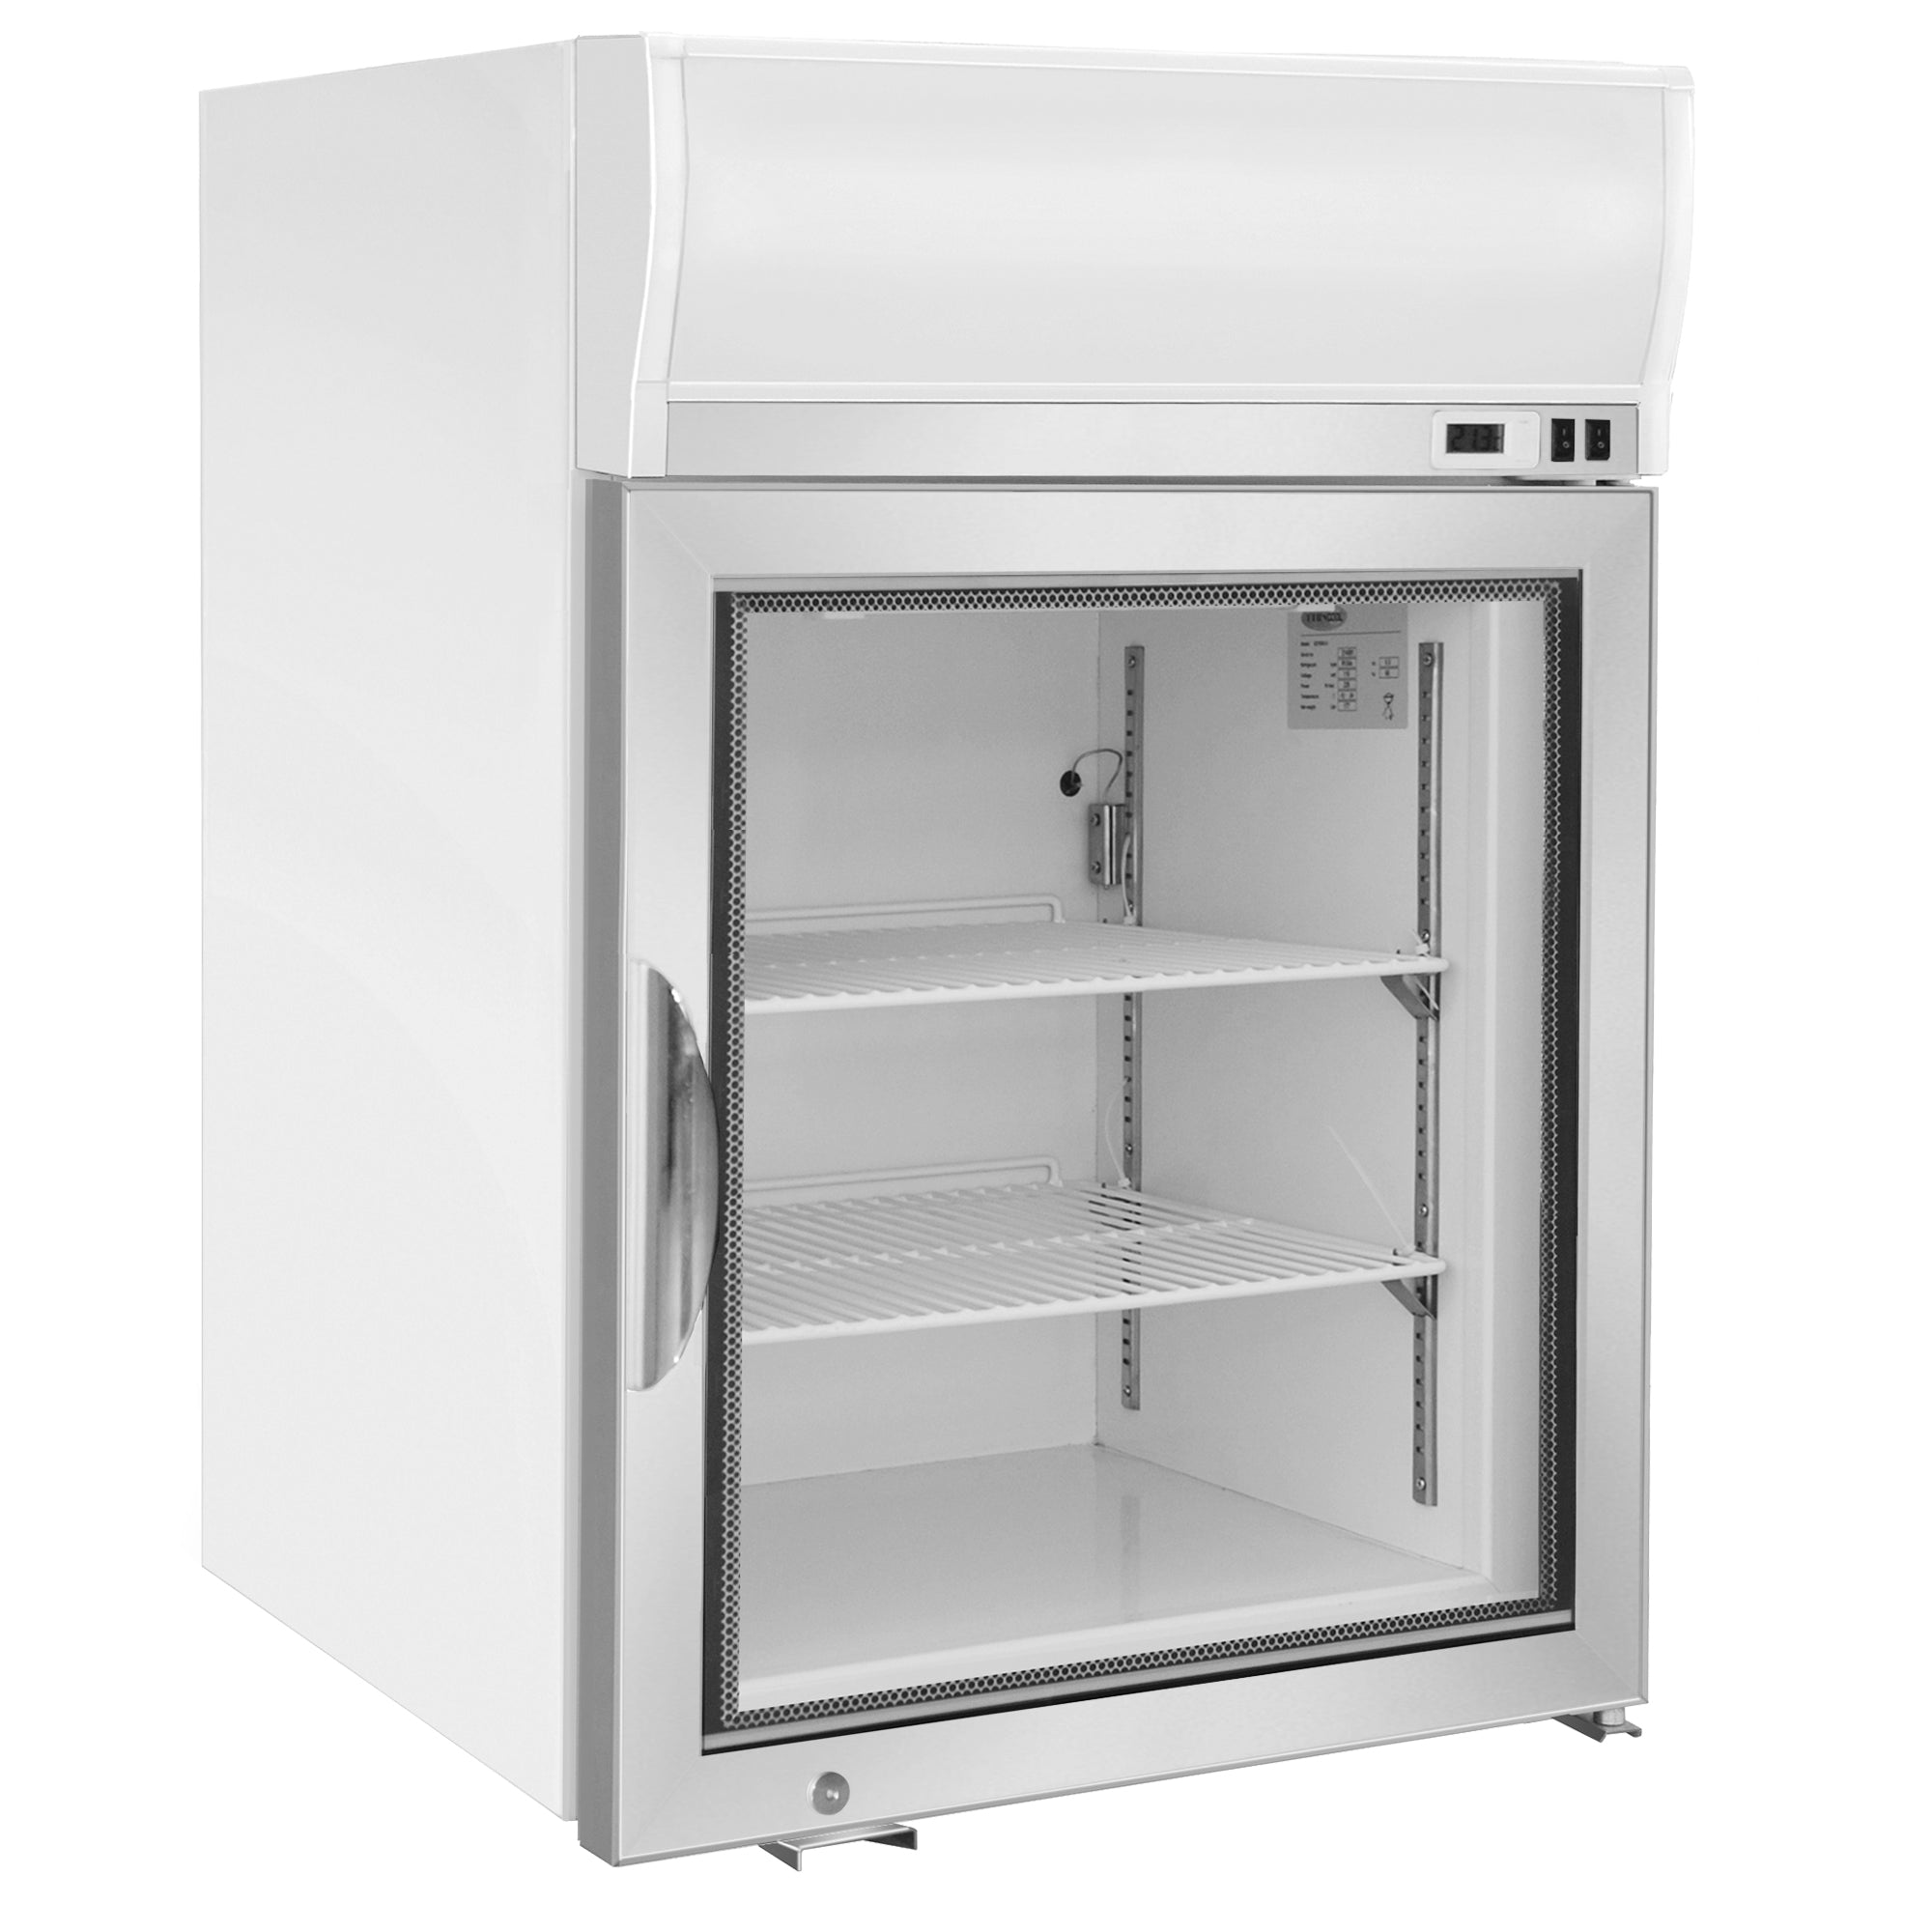 Maxx Cold - MXM1-4FHC, Maxx Cold Merchandiser Freezer, Countertop, 24.4"W, 4.2 cu. ft. Storage Capacity, in White